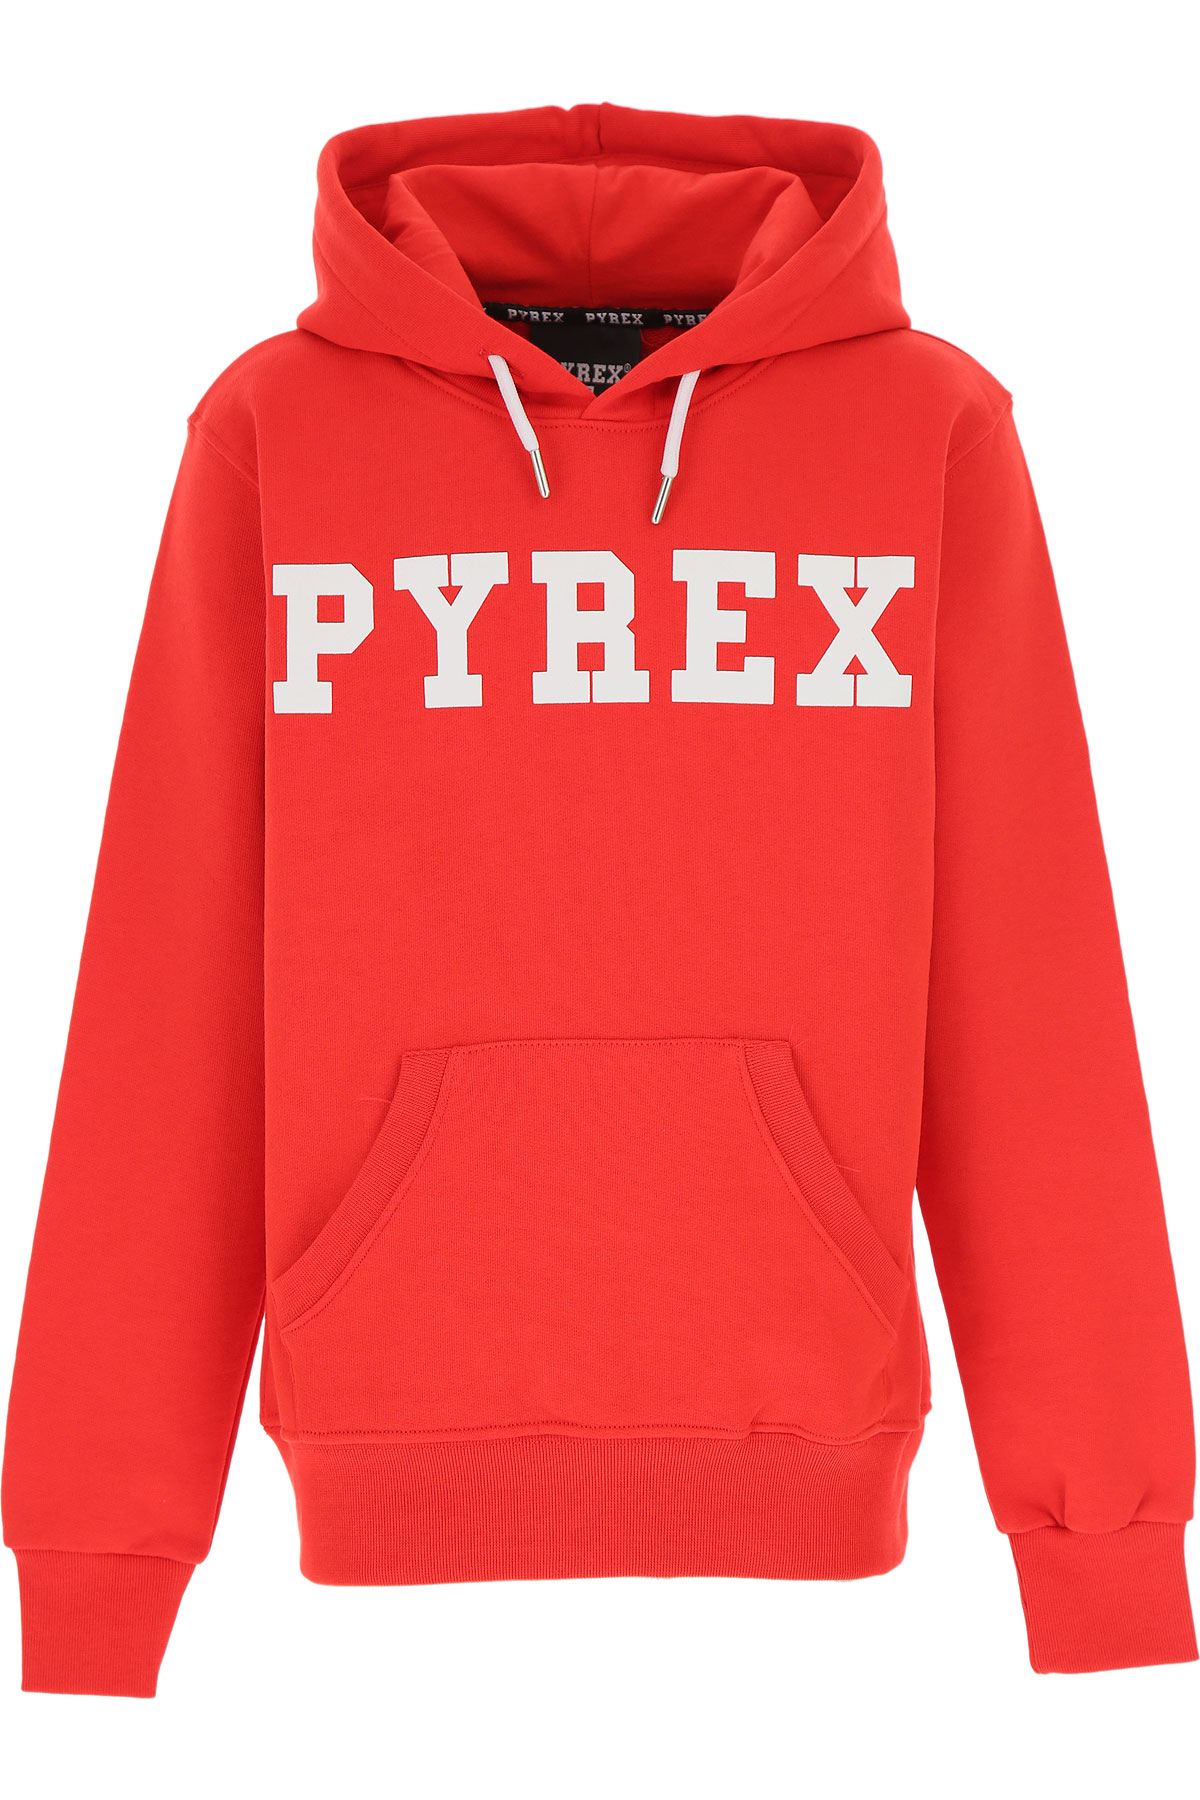 Kidswear Pyrex, Style code: 024776-040-